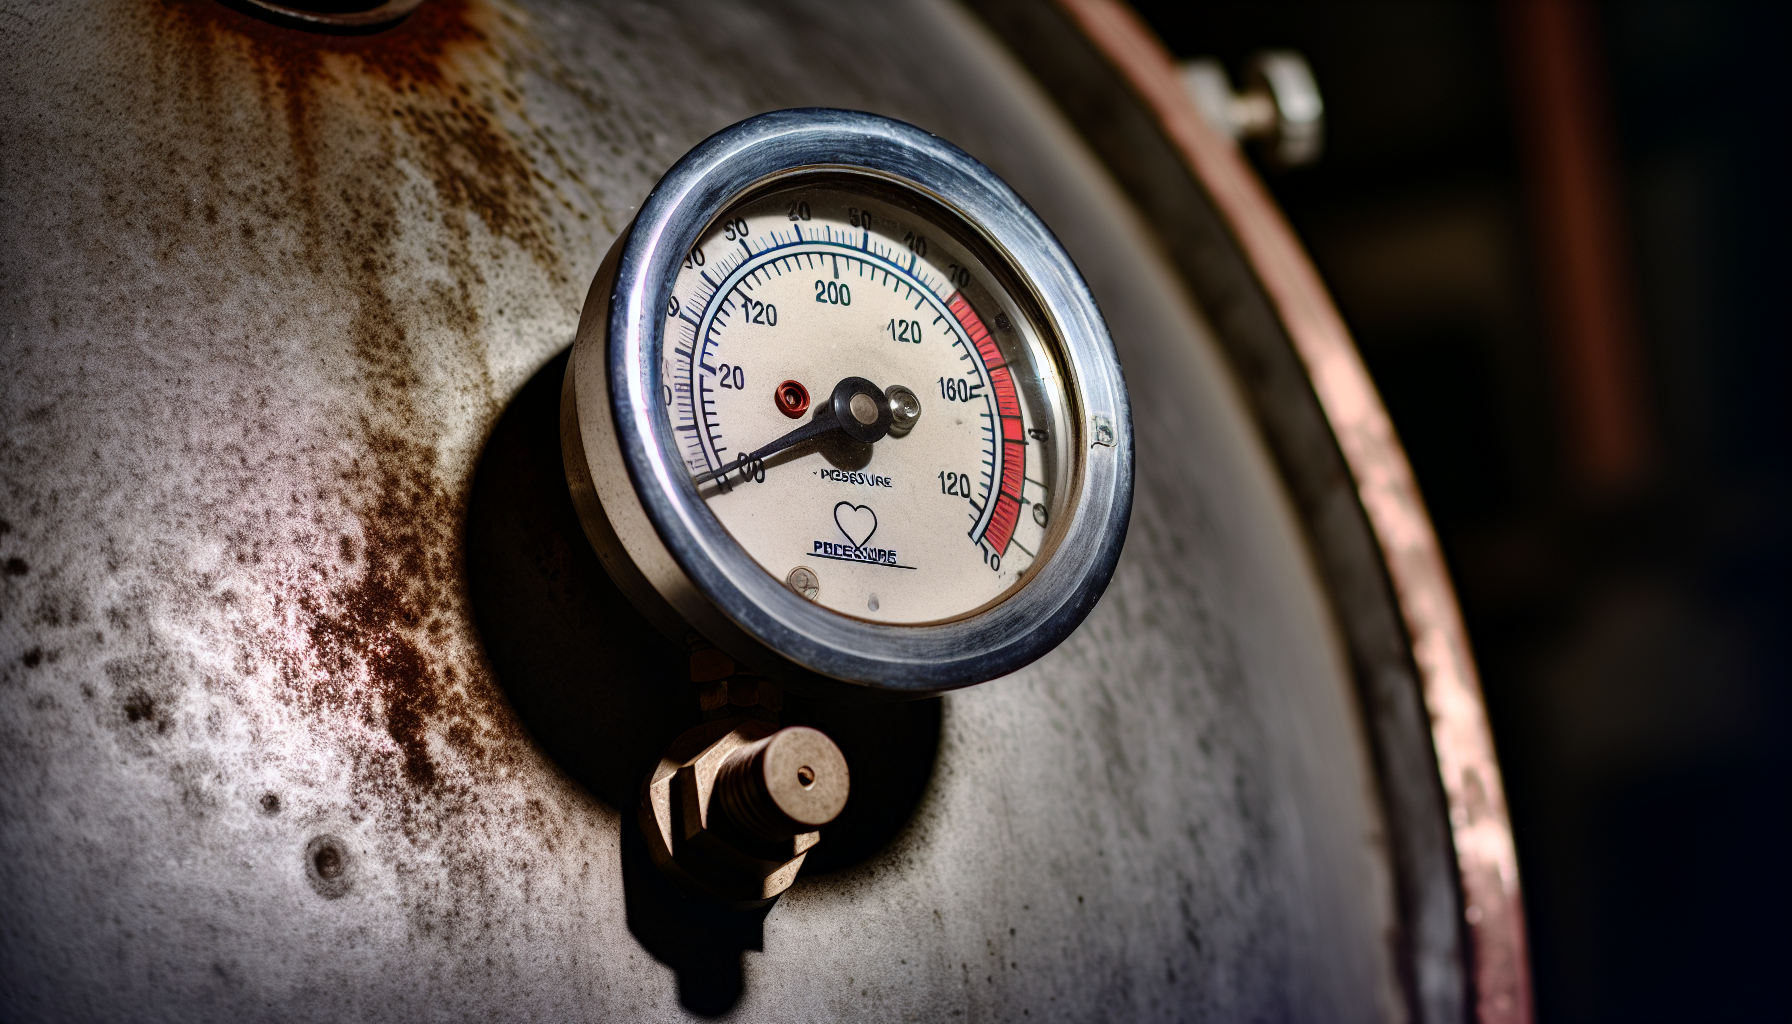 High boiler pressure gauge reading